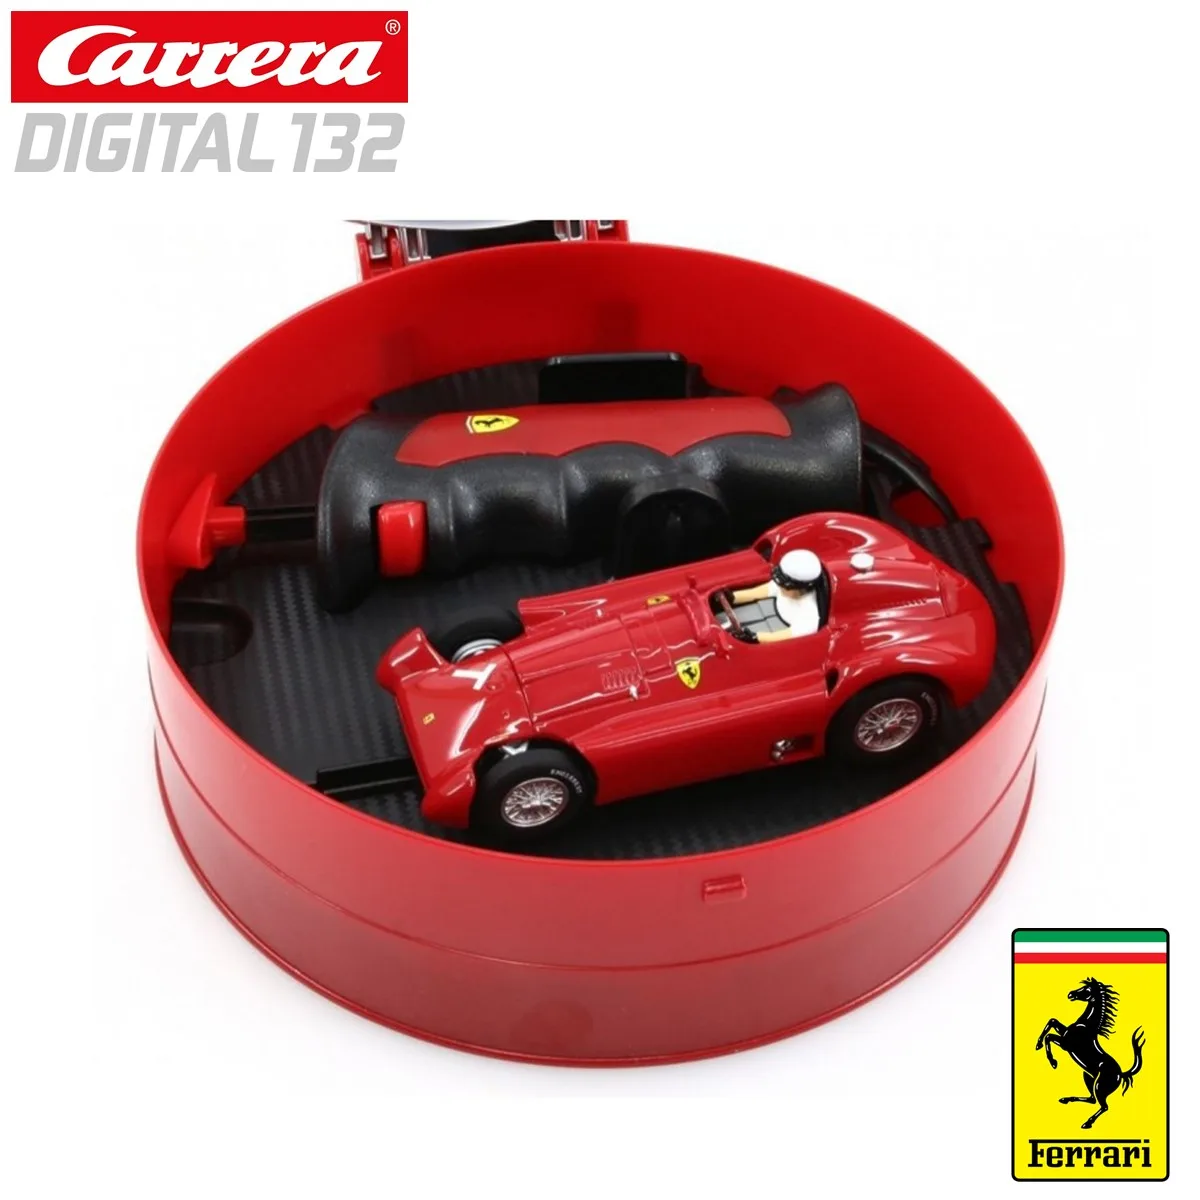 Carrera Digital132 | Carrera Slot Car | Ferrari Carrera | Ferrari D50 - Carrera  Car - Aliexpress